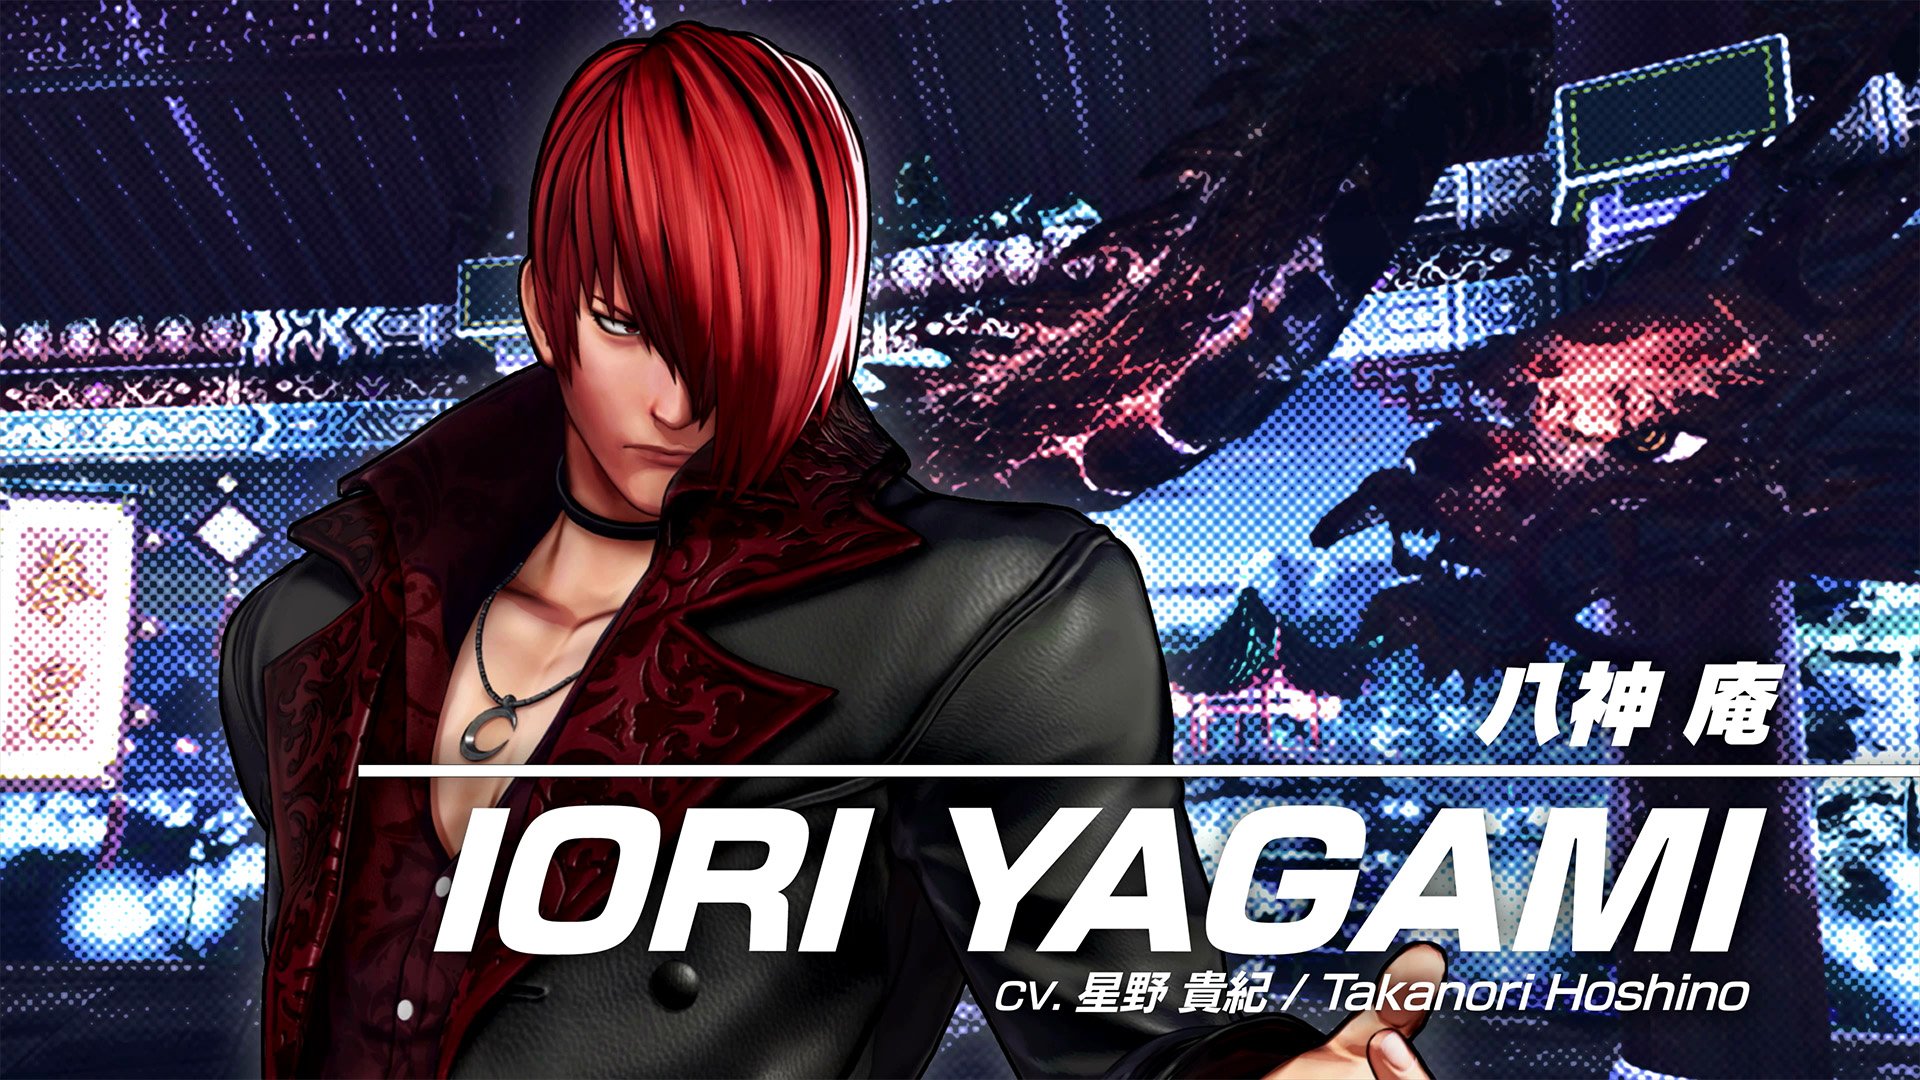 O mais foda dos King Of Fighters : Iori Yagami